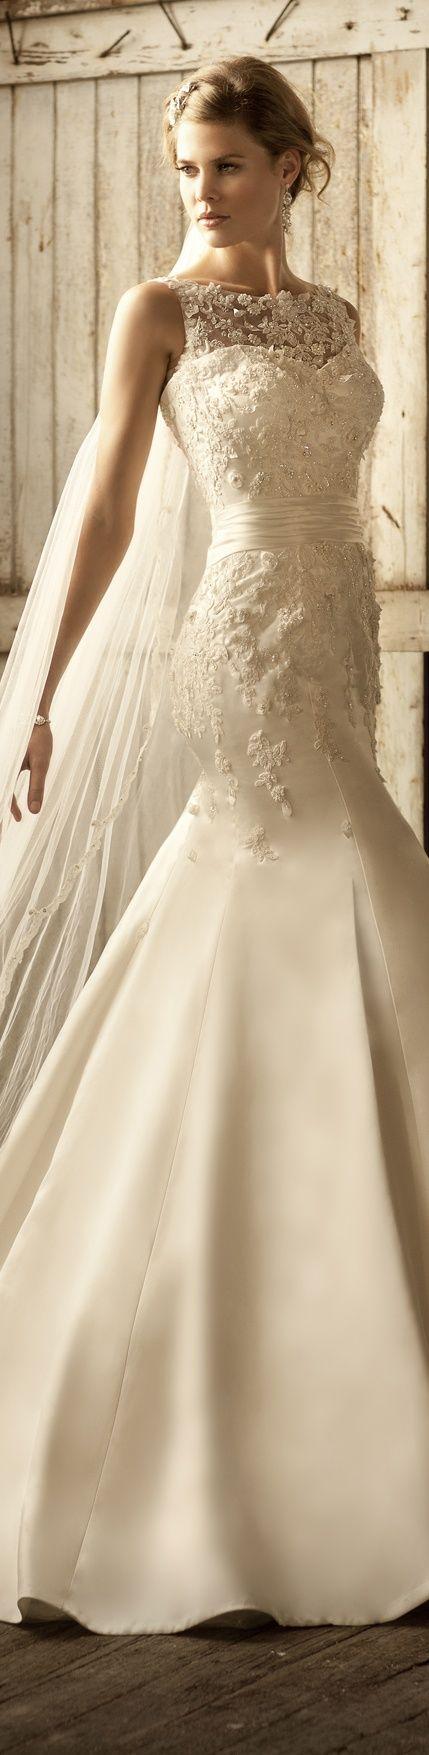 Hochzeit - Best Beautiful Wedding Dresses For 2015